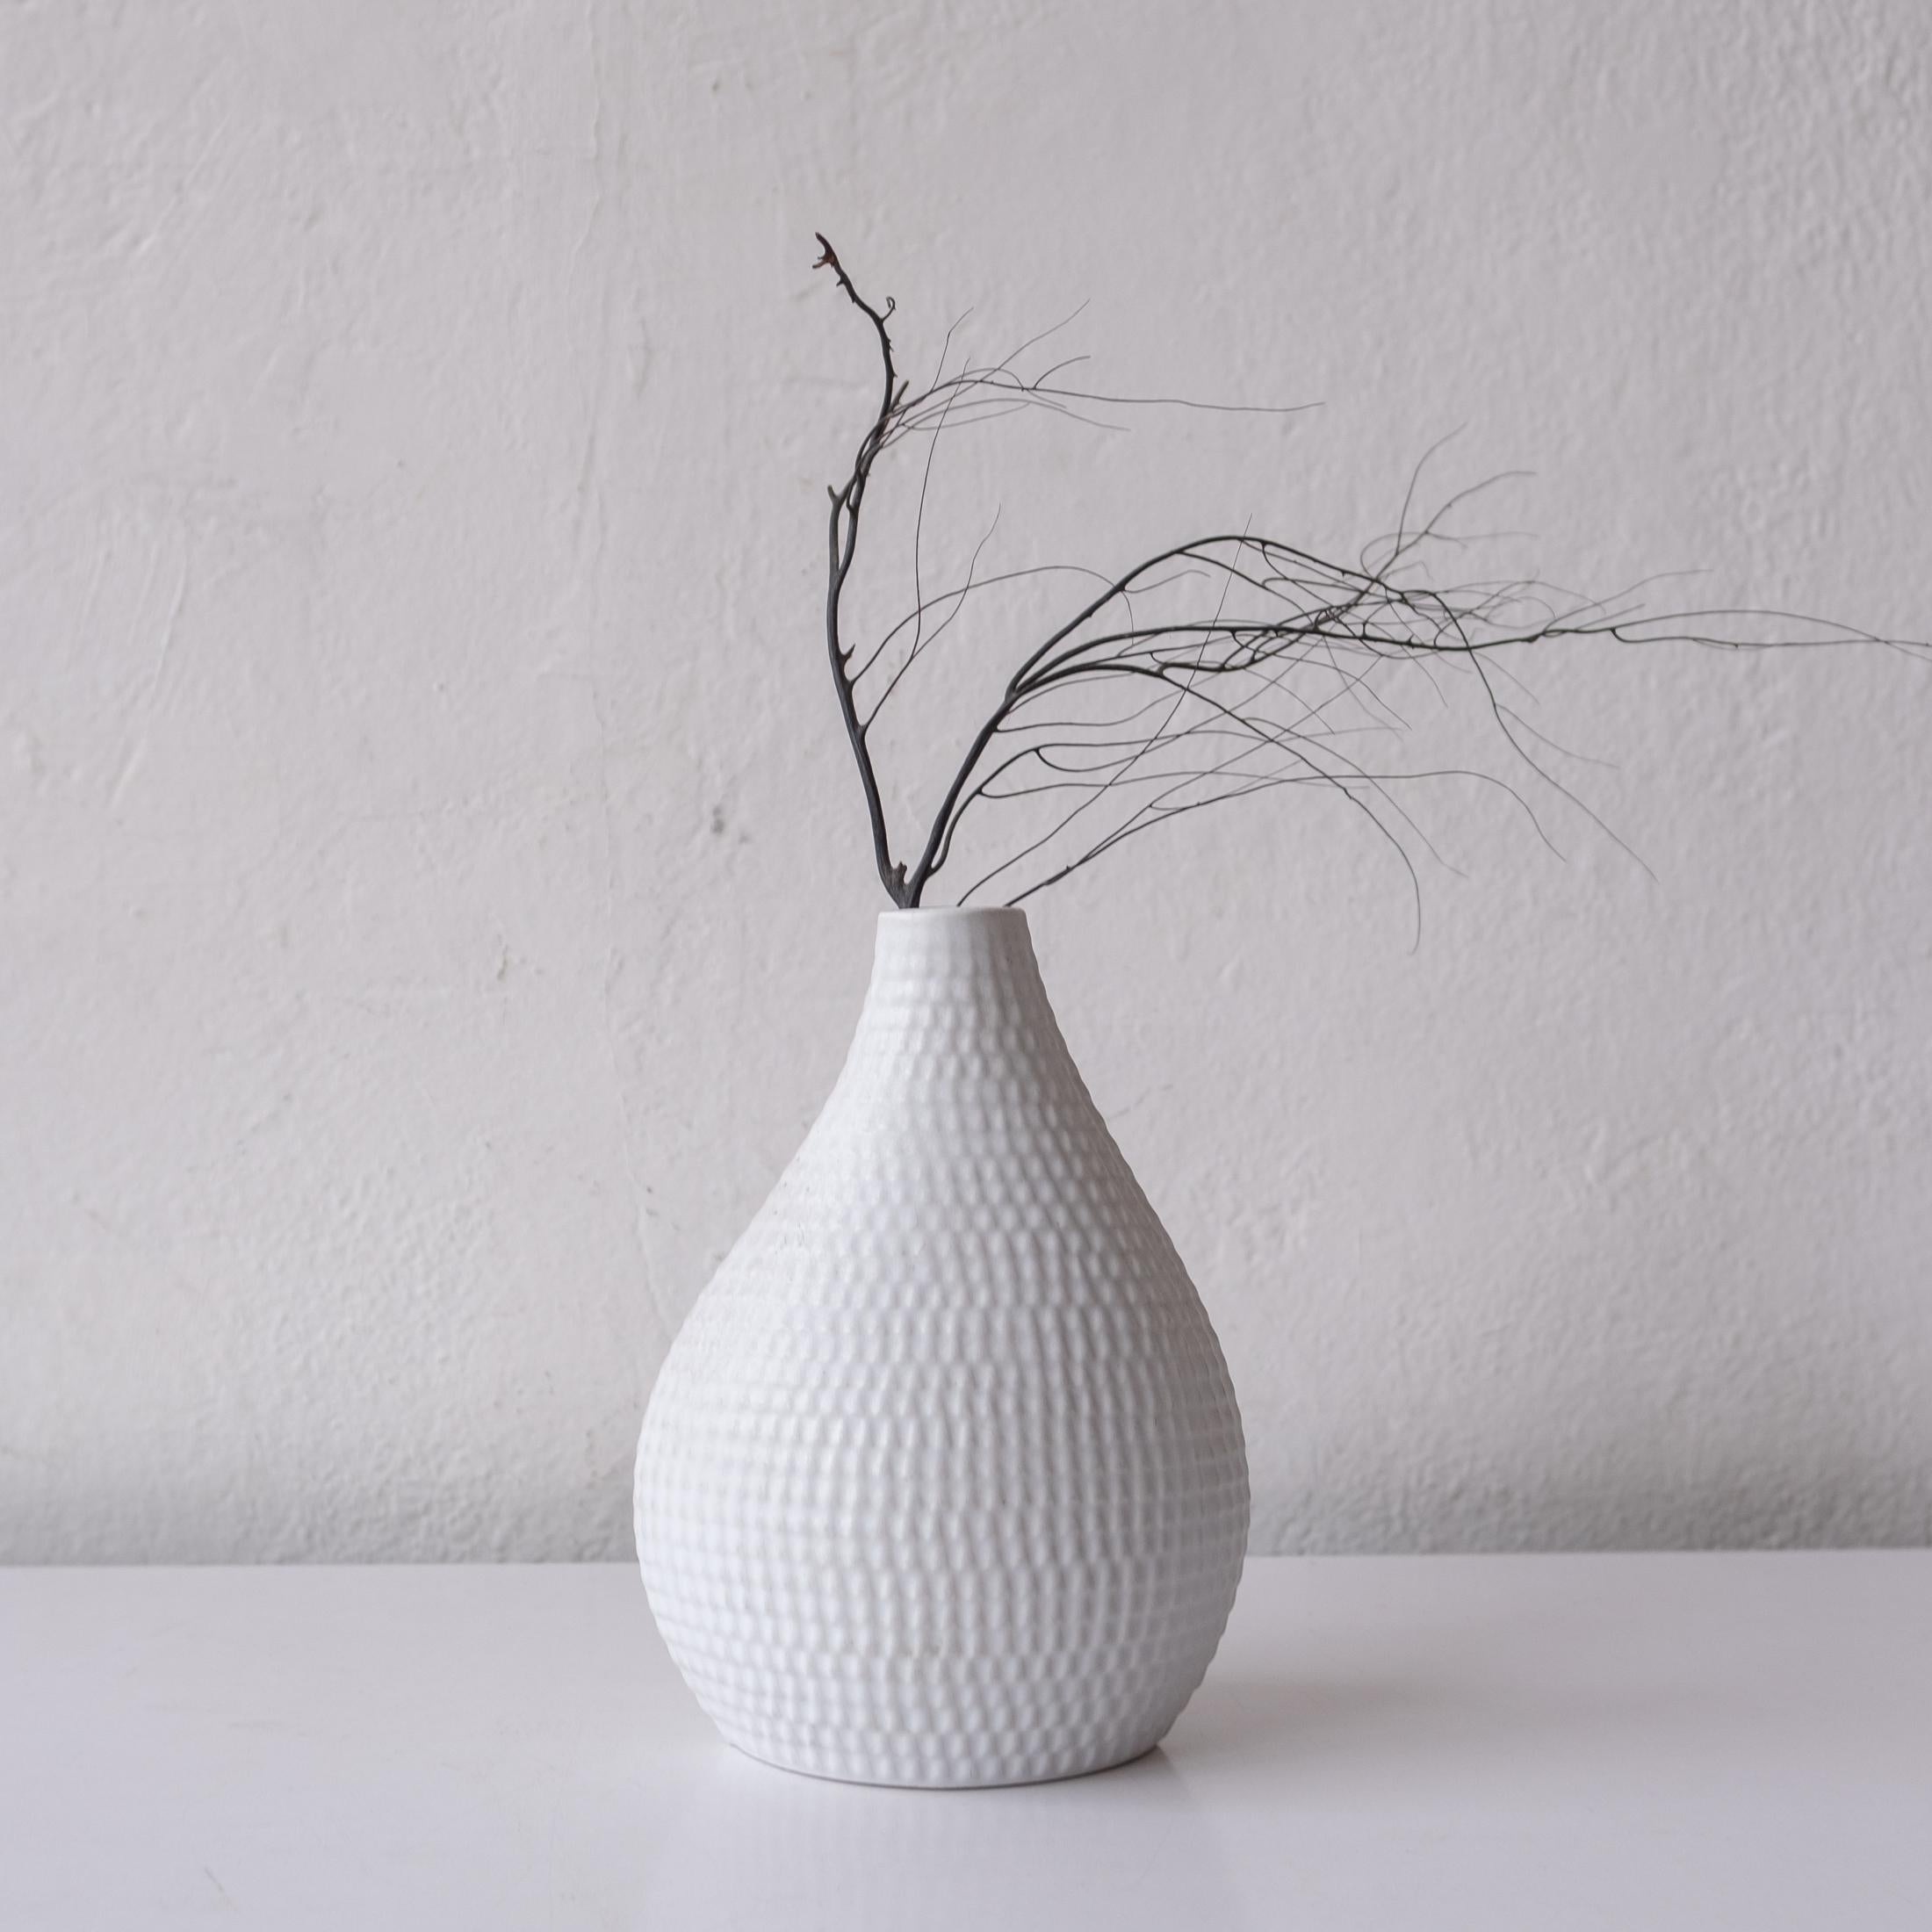 Stig Lindberg for Gustavsberg Reptil ceramic matte white vase. It retains the original labels on the bottom.